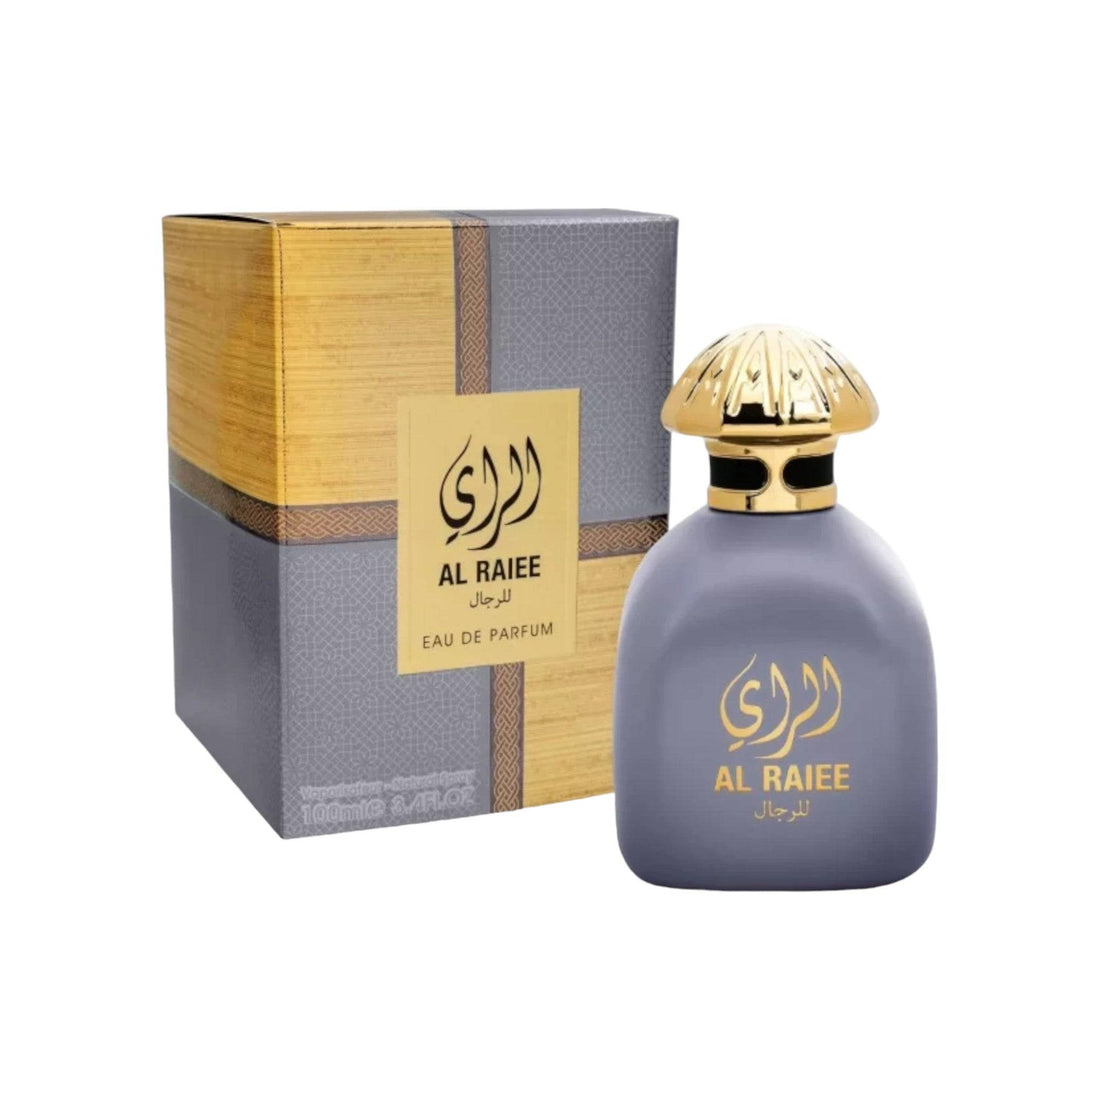 Al Raiee Lil Rijal 100ml Eau De Parfum bottle, showcasing its sleek design and premium packaging.